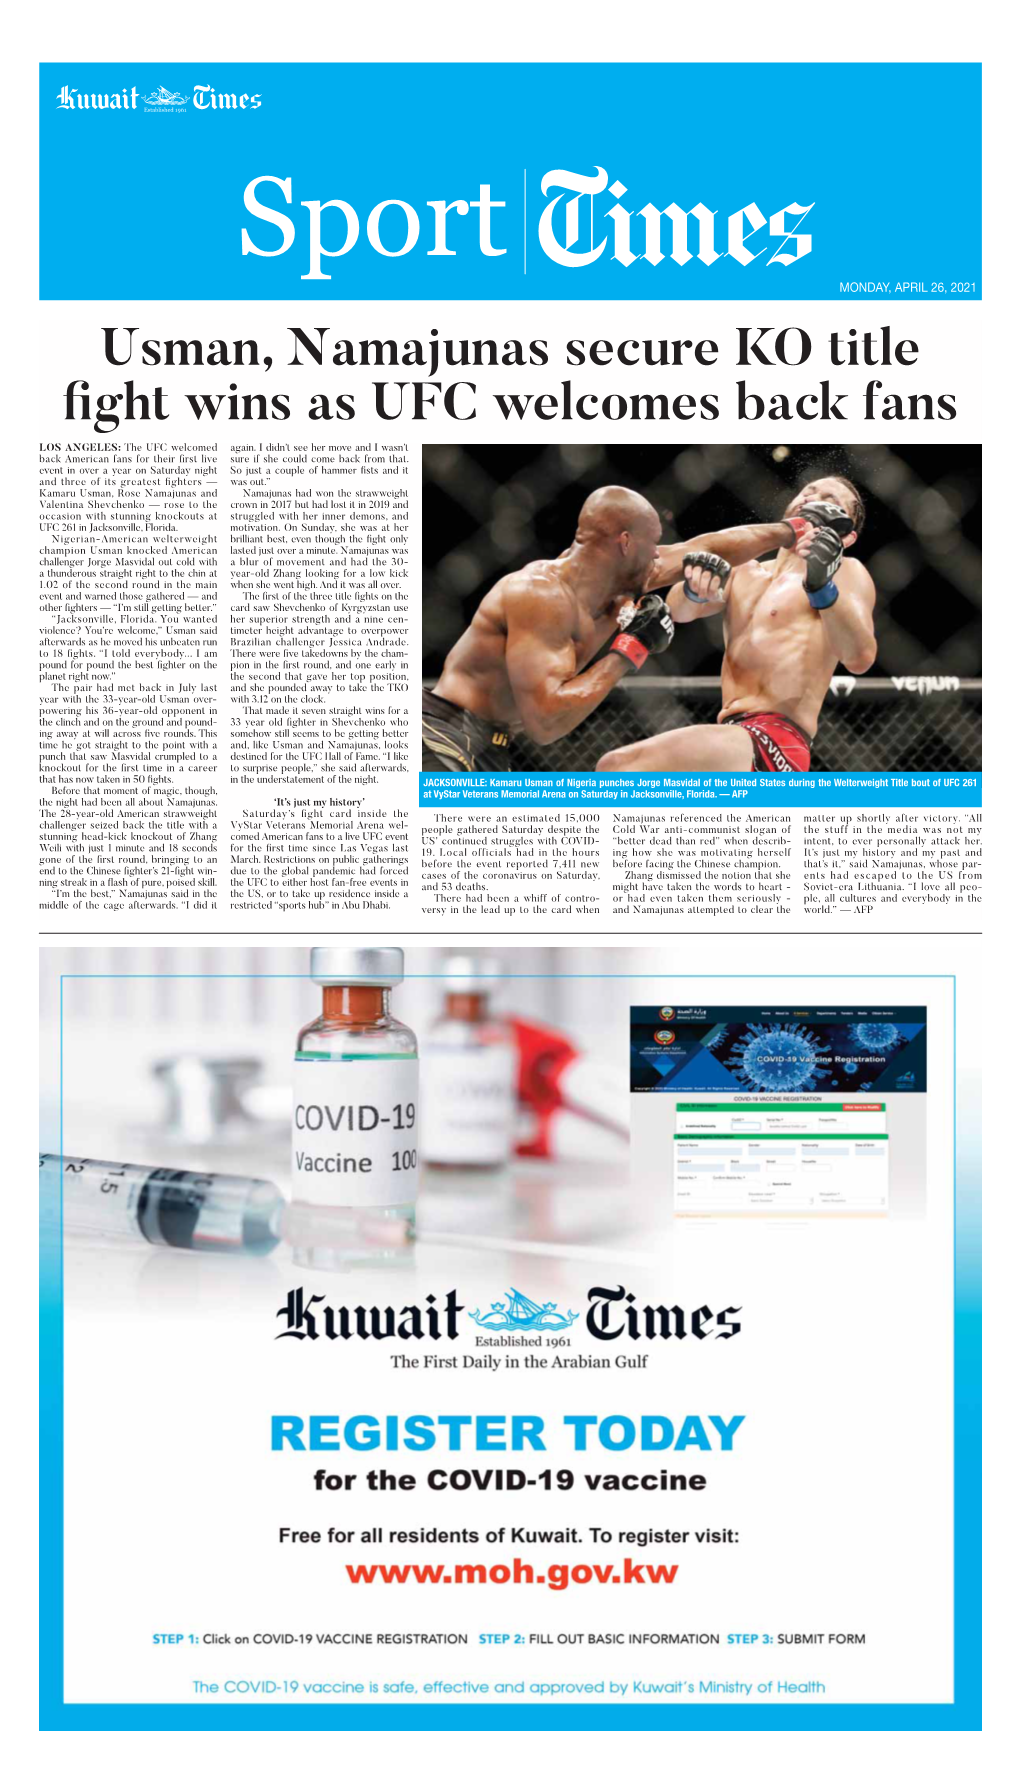 Usman, Namajunas Secure KO Title Fight Wins As UFC Welcomes Back Fans